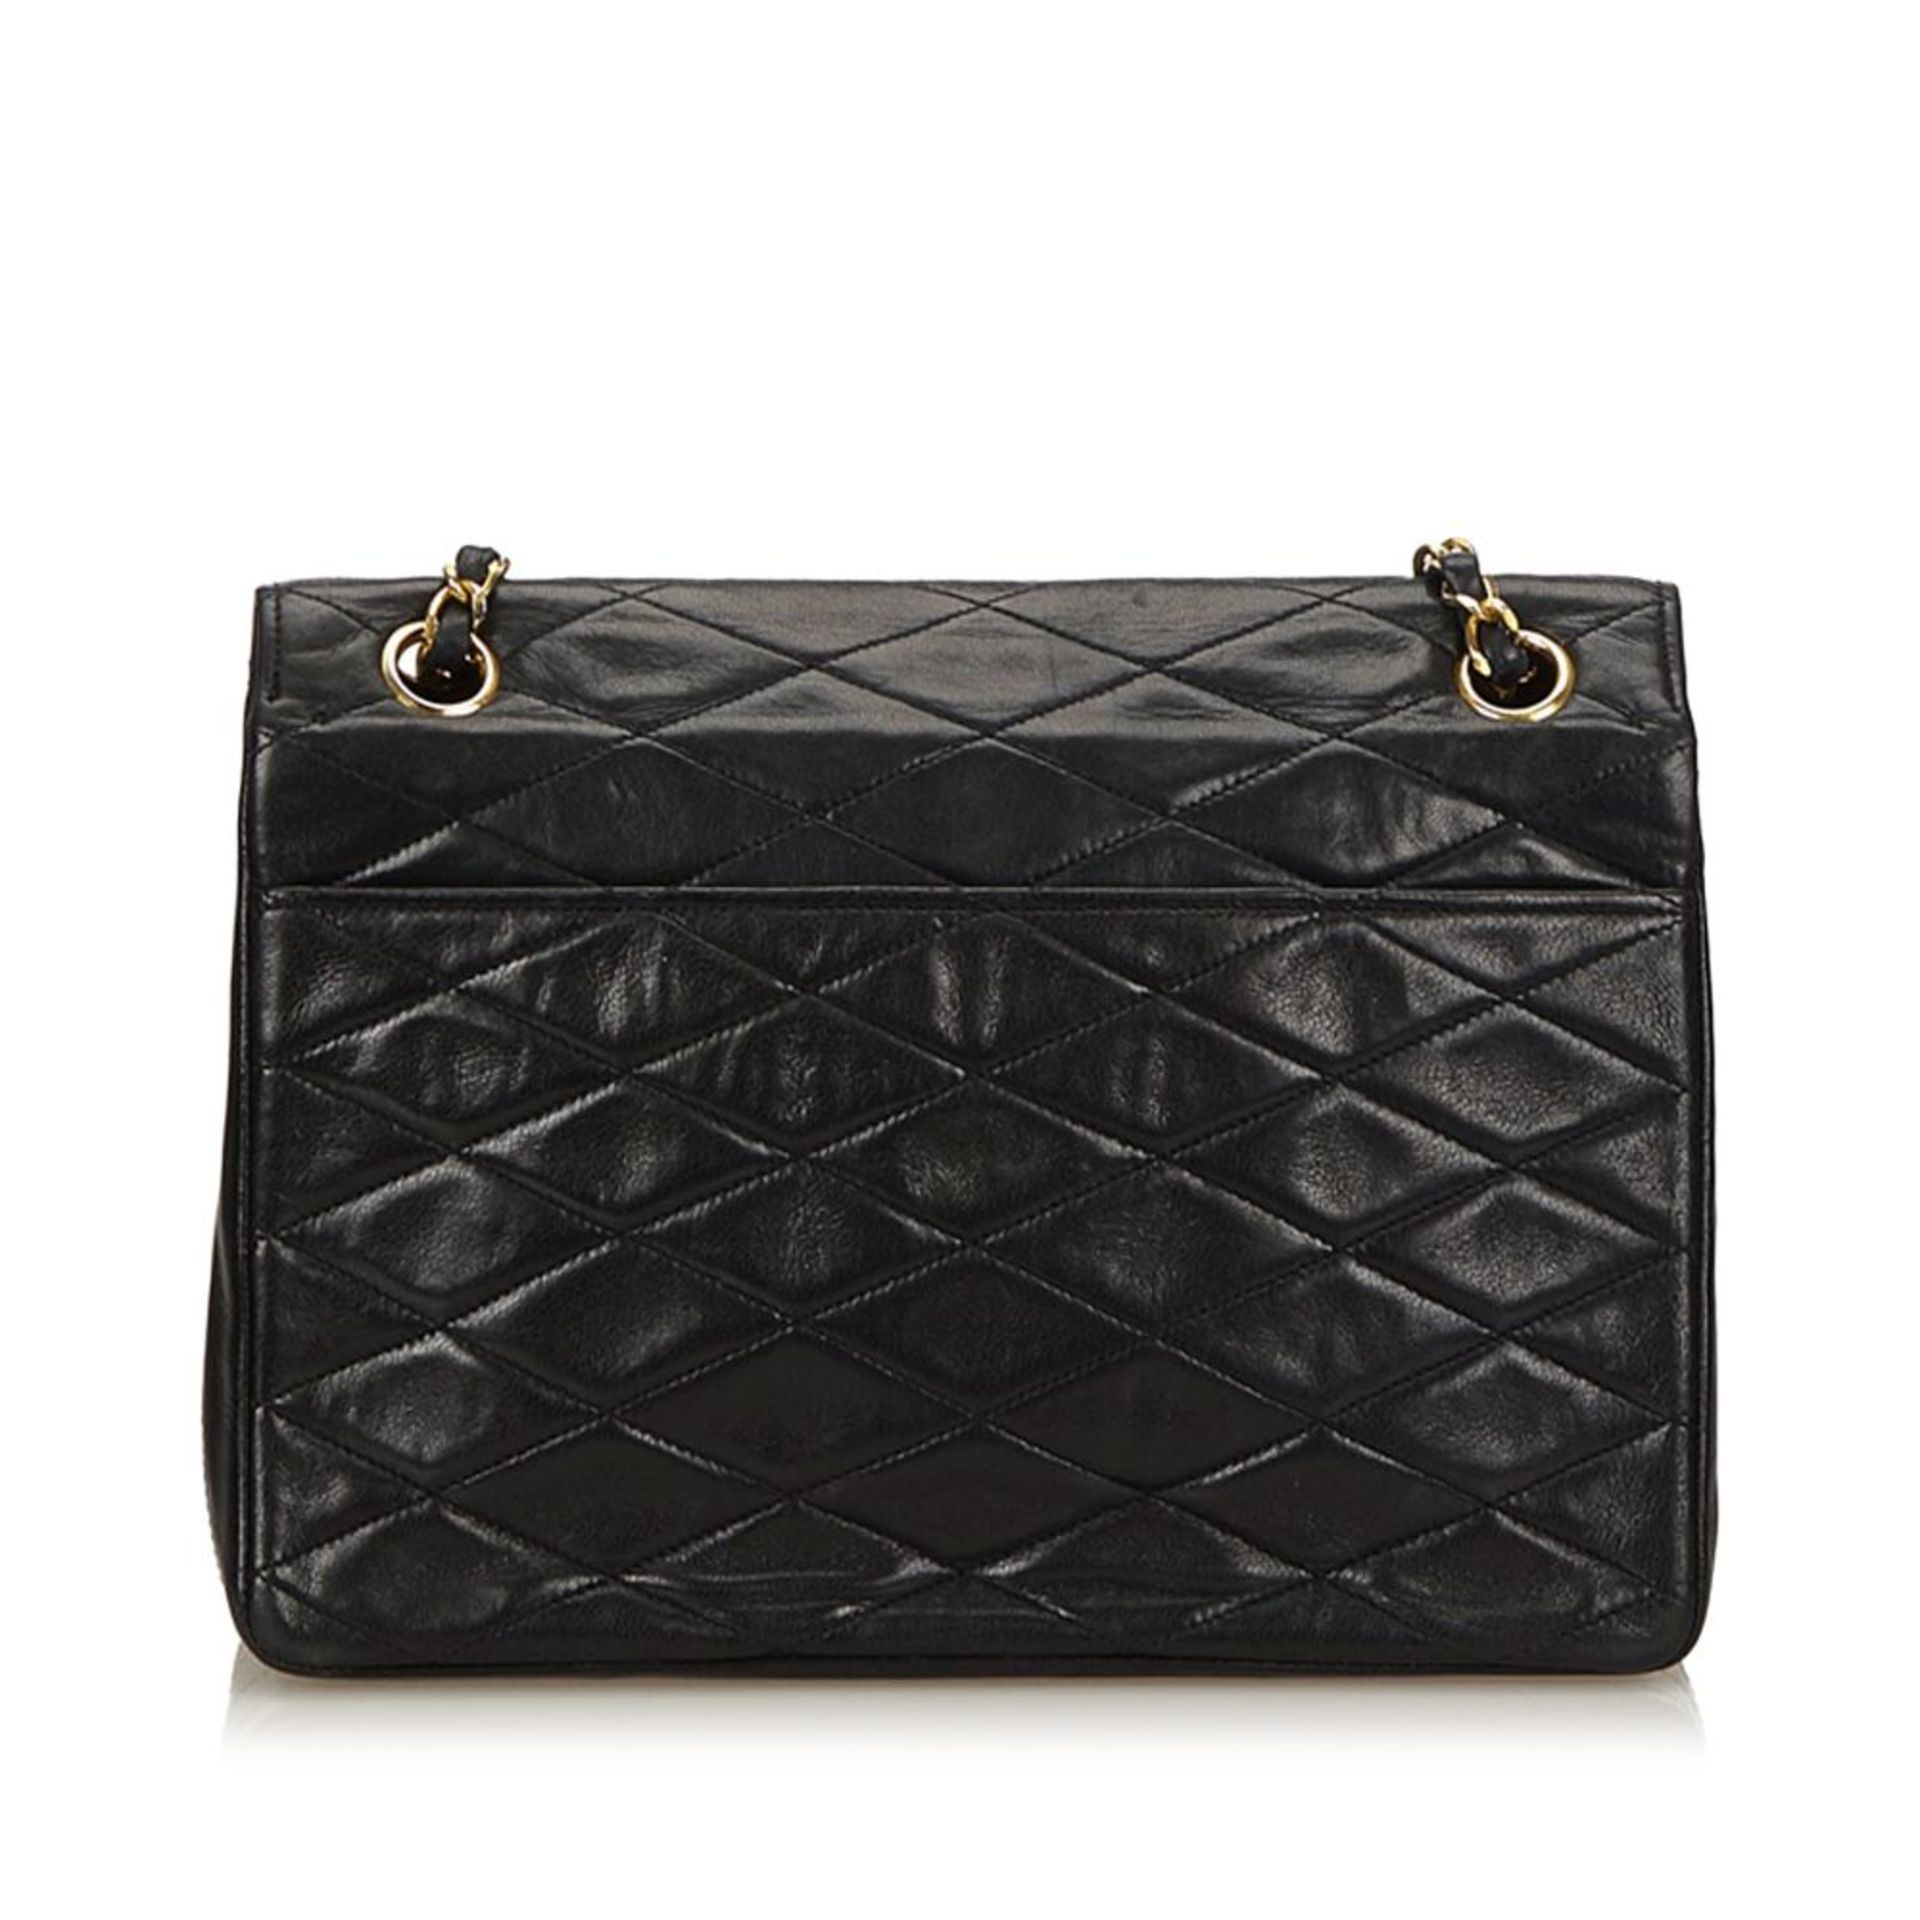 A Chanel matelassé leather chain flap bag,featuring a leather body, exterior back open pocket, - Bild 3 aus 5